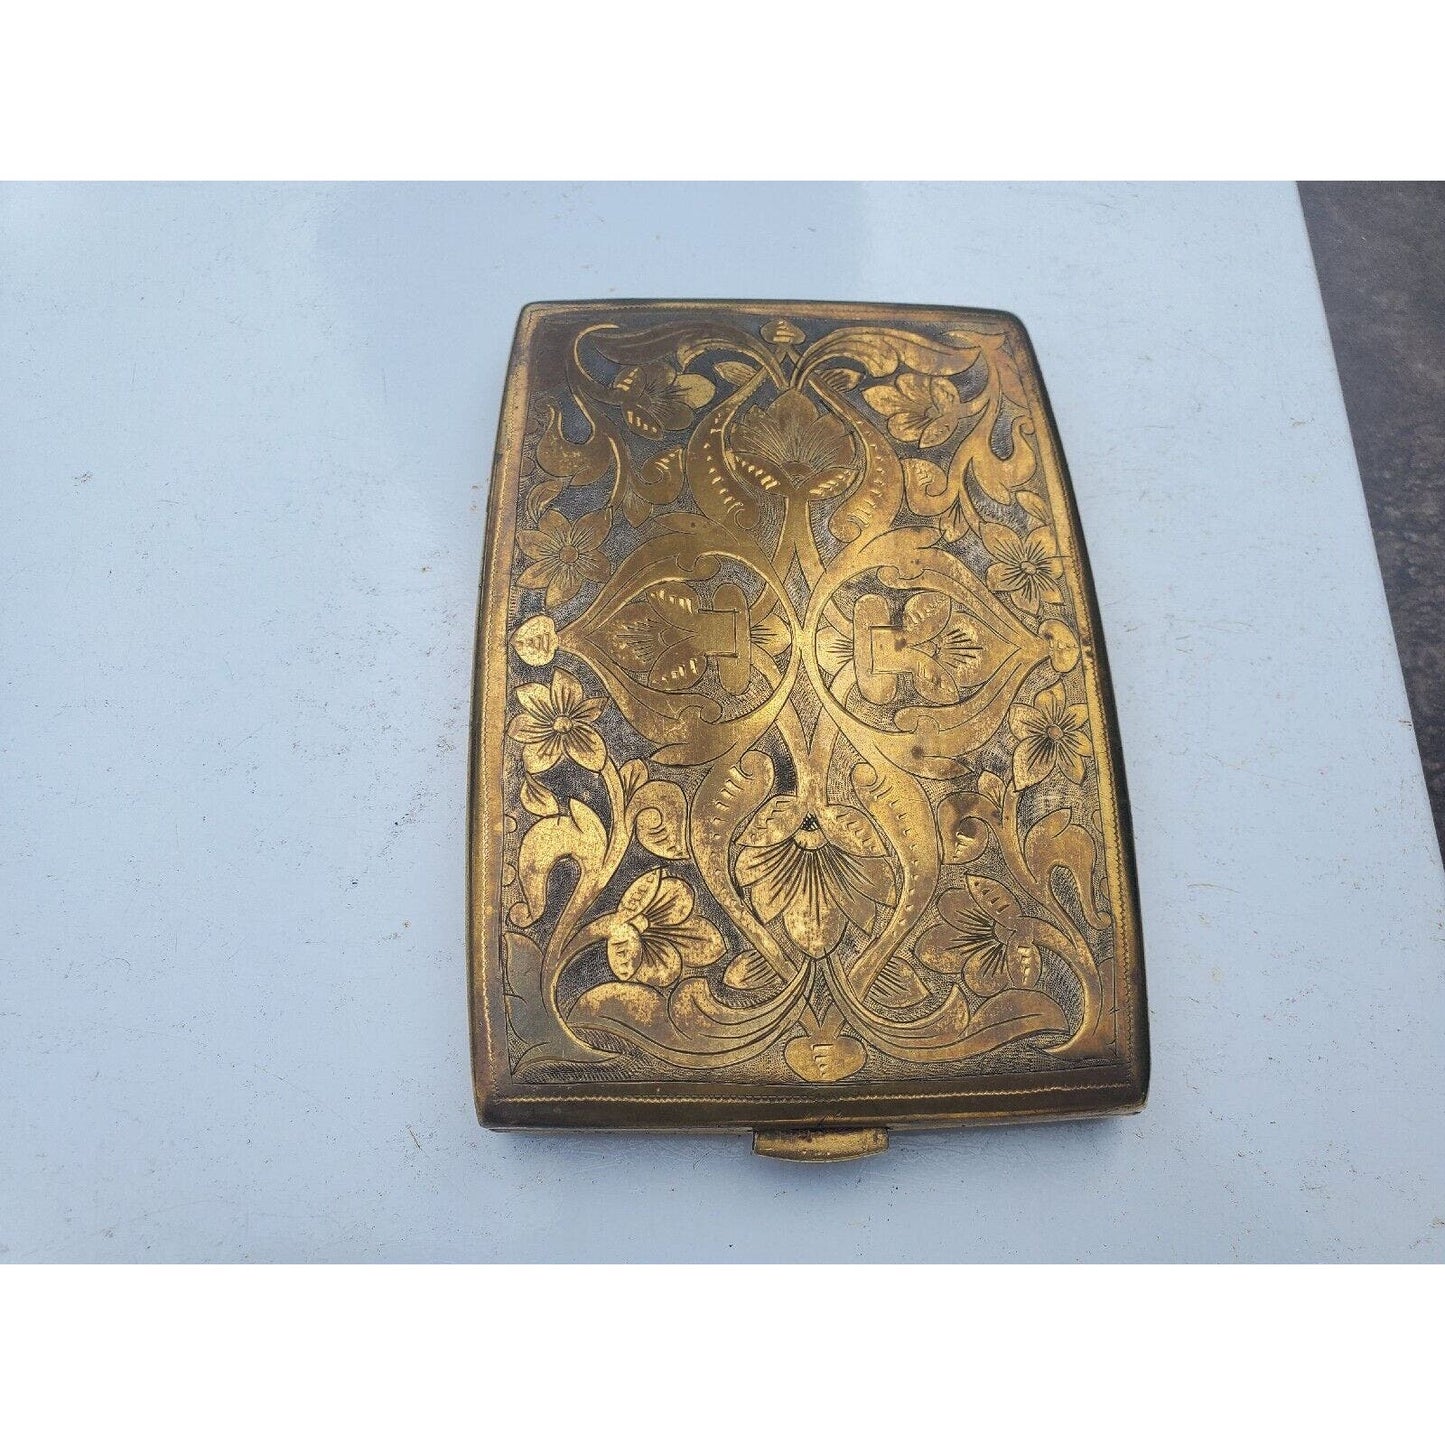 Antique Persian Gold Tone Brass Cigarette Case 4 3/4 x 3 1/4 5513/15